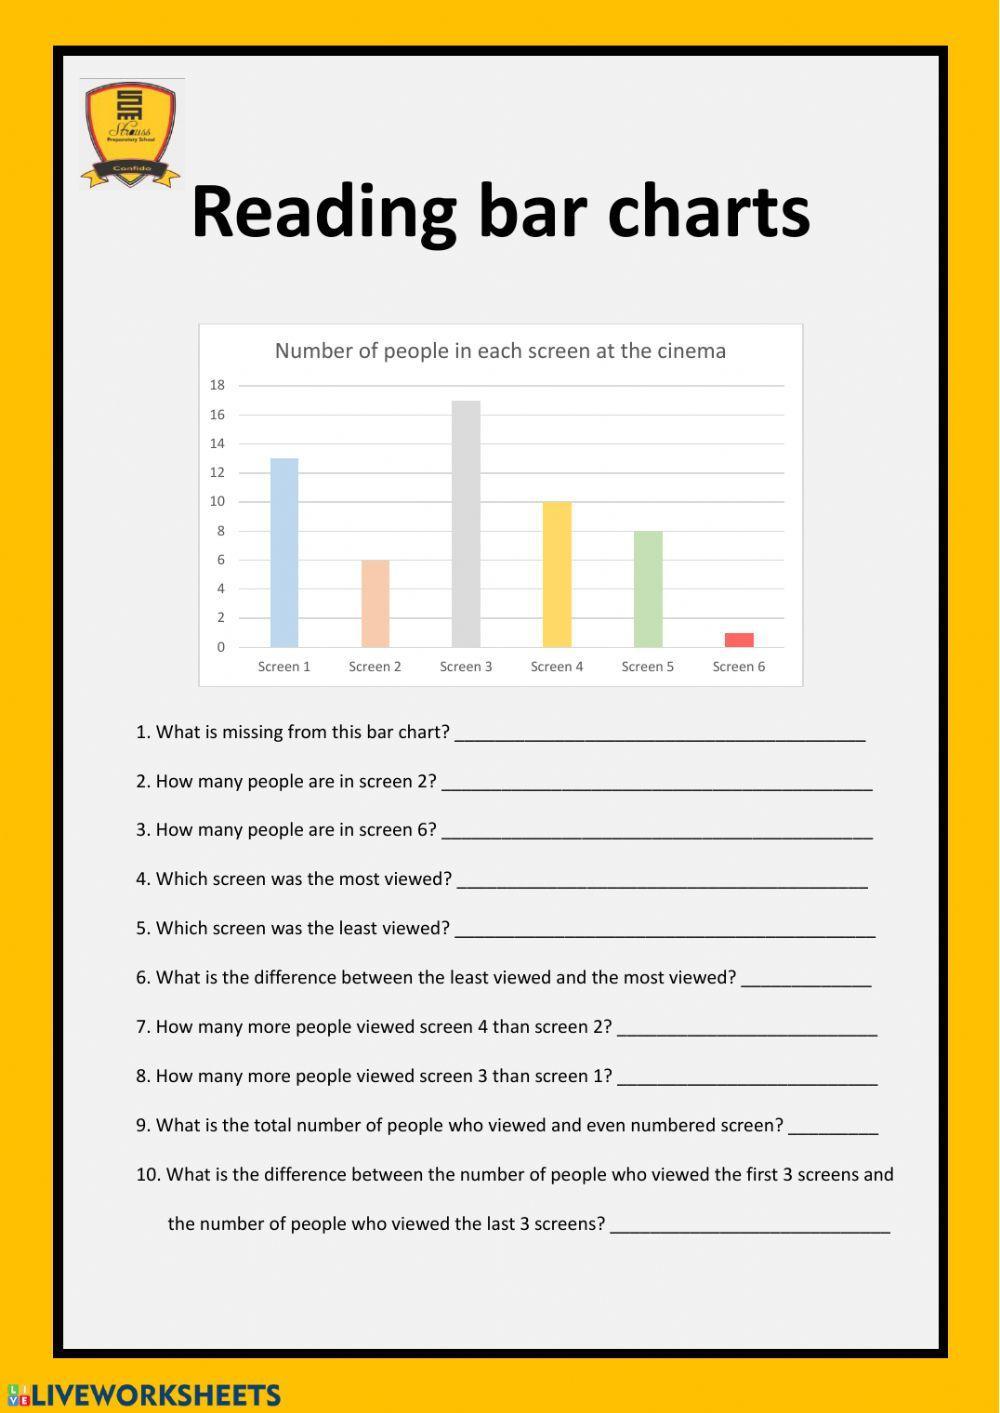 Interpreting bar graphs